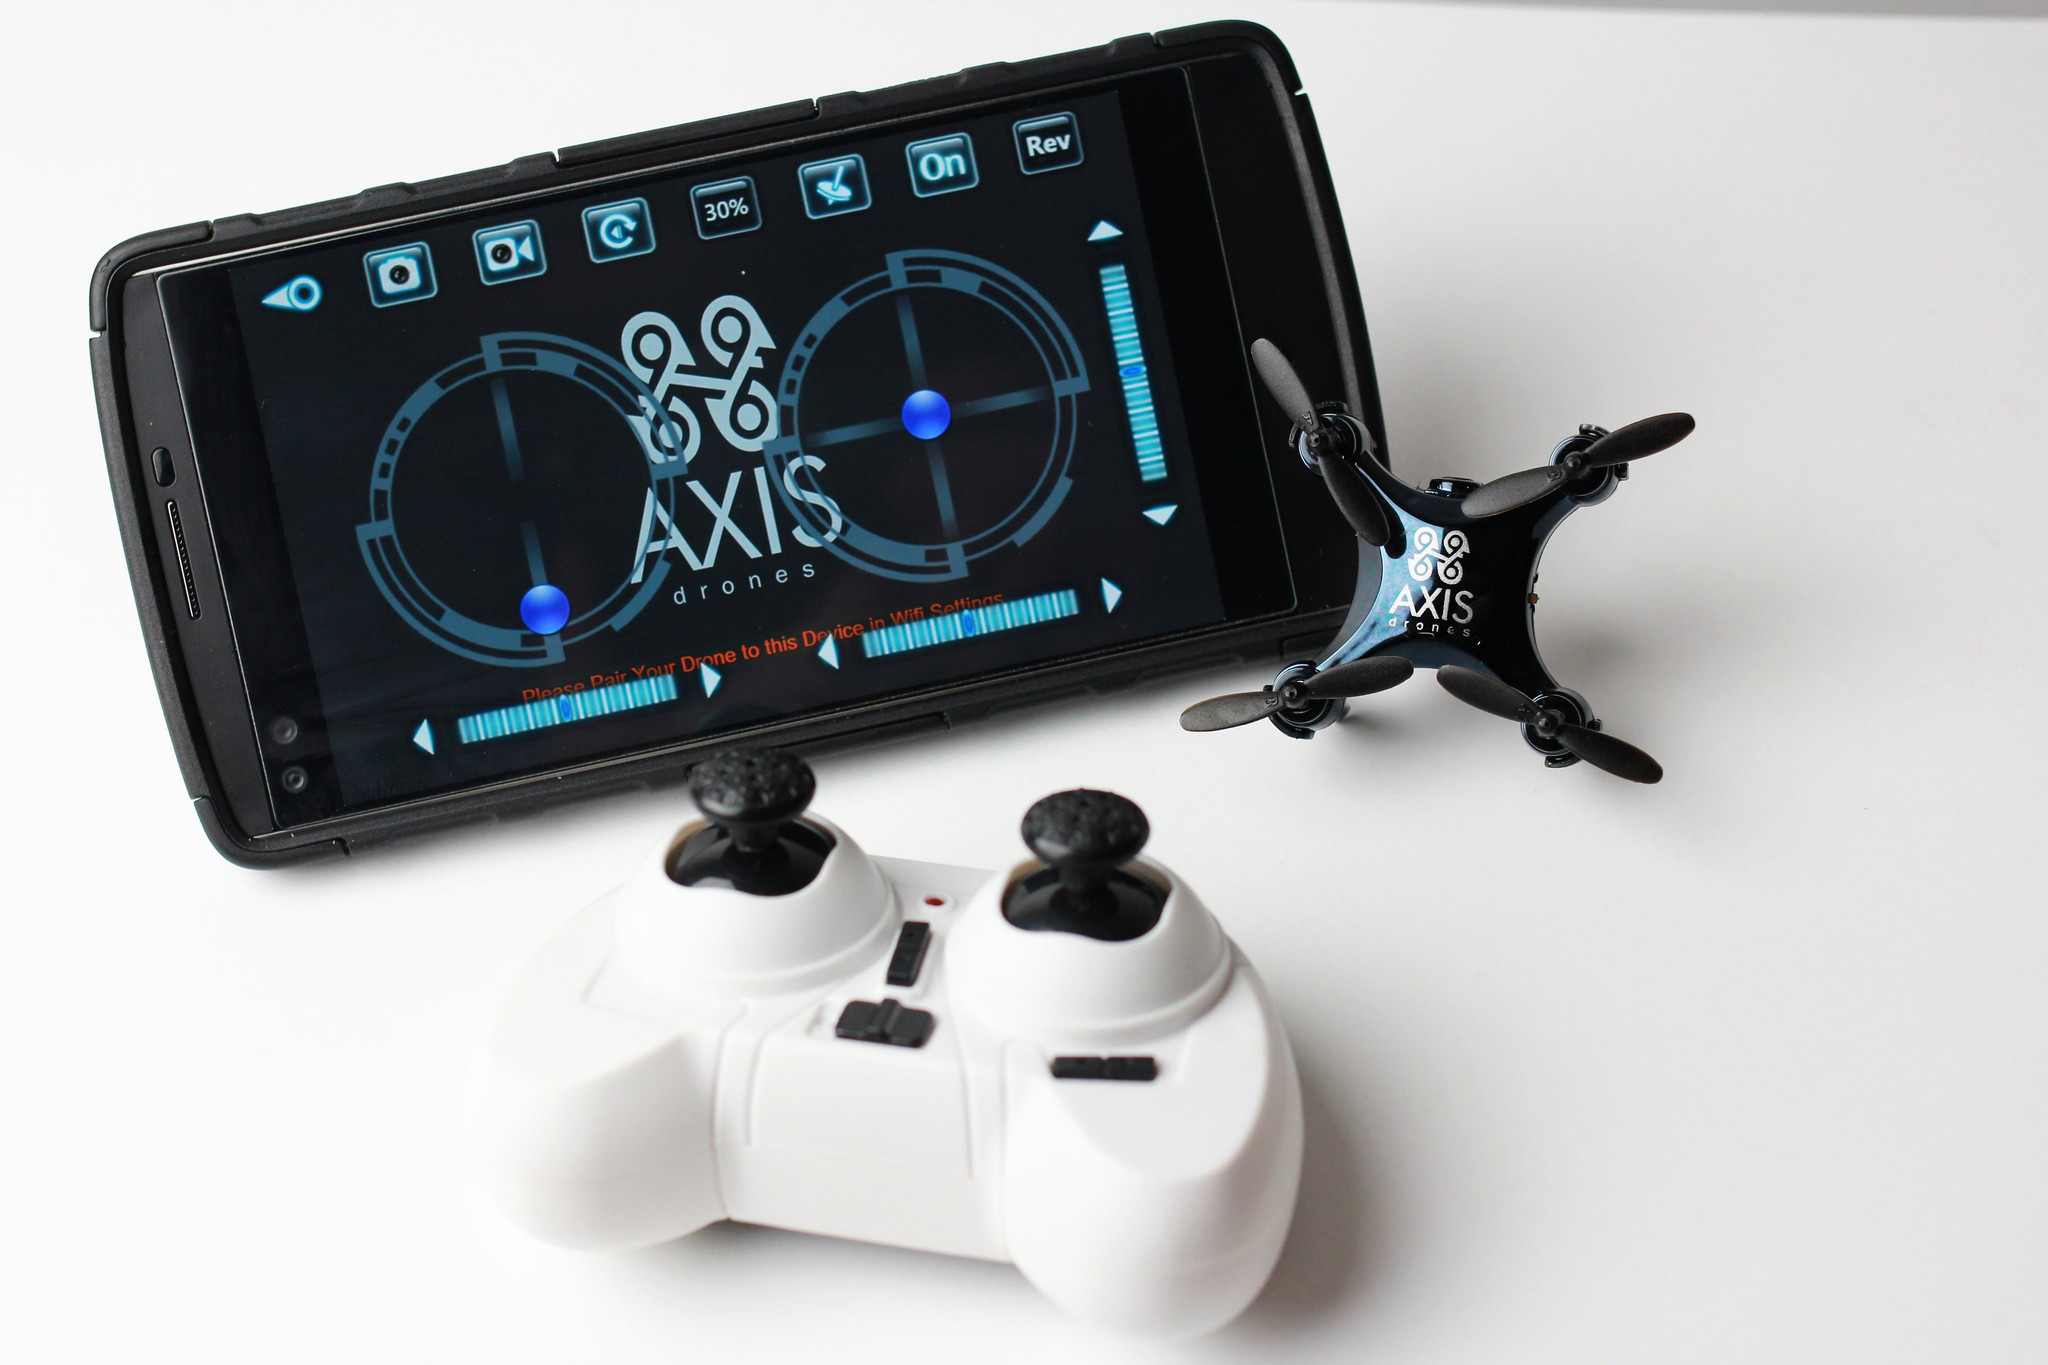 Axis Vidius nano-drone with controller and phone